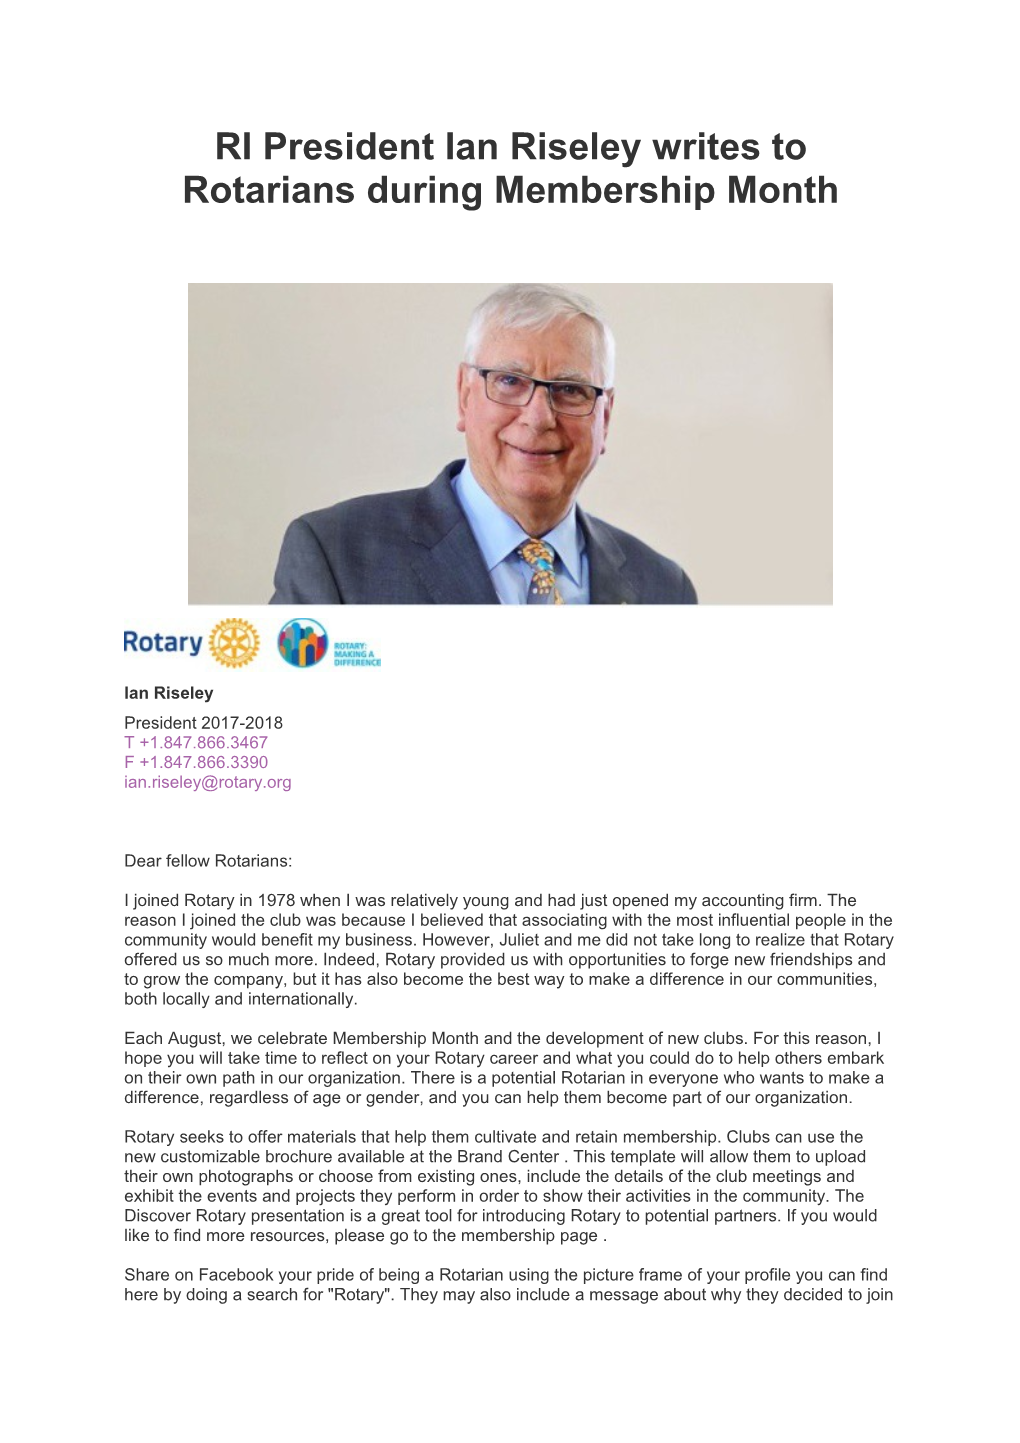 RI President Ian Riseley Writes to Rotarians During Membership Month